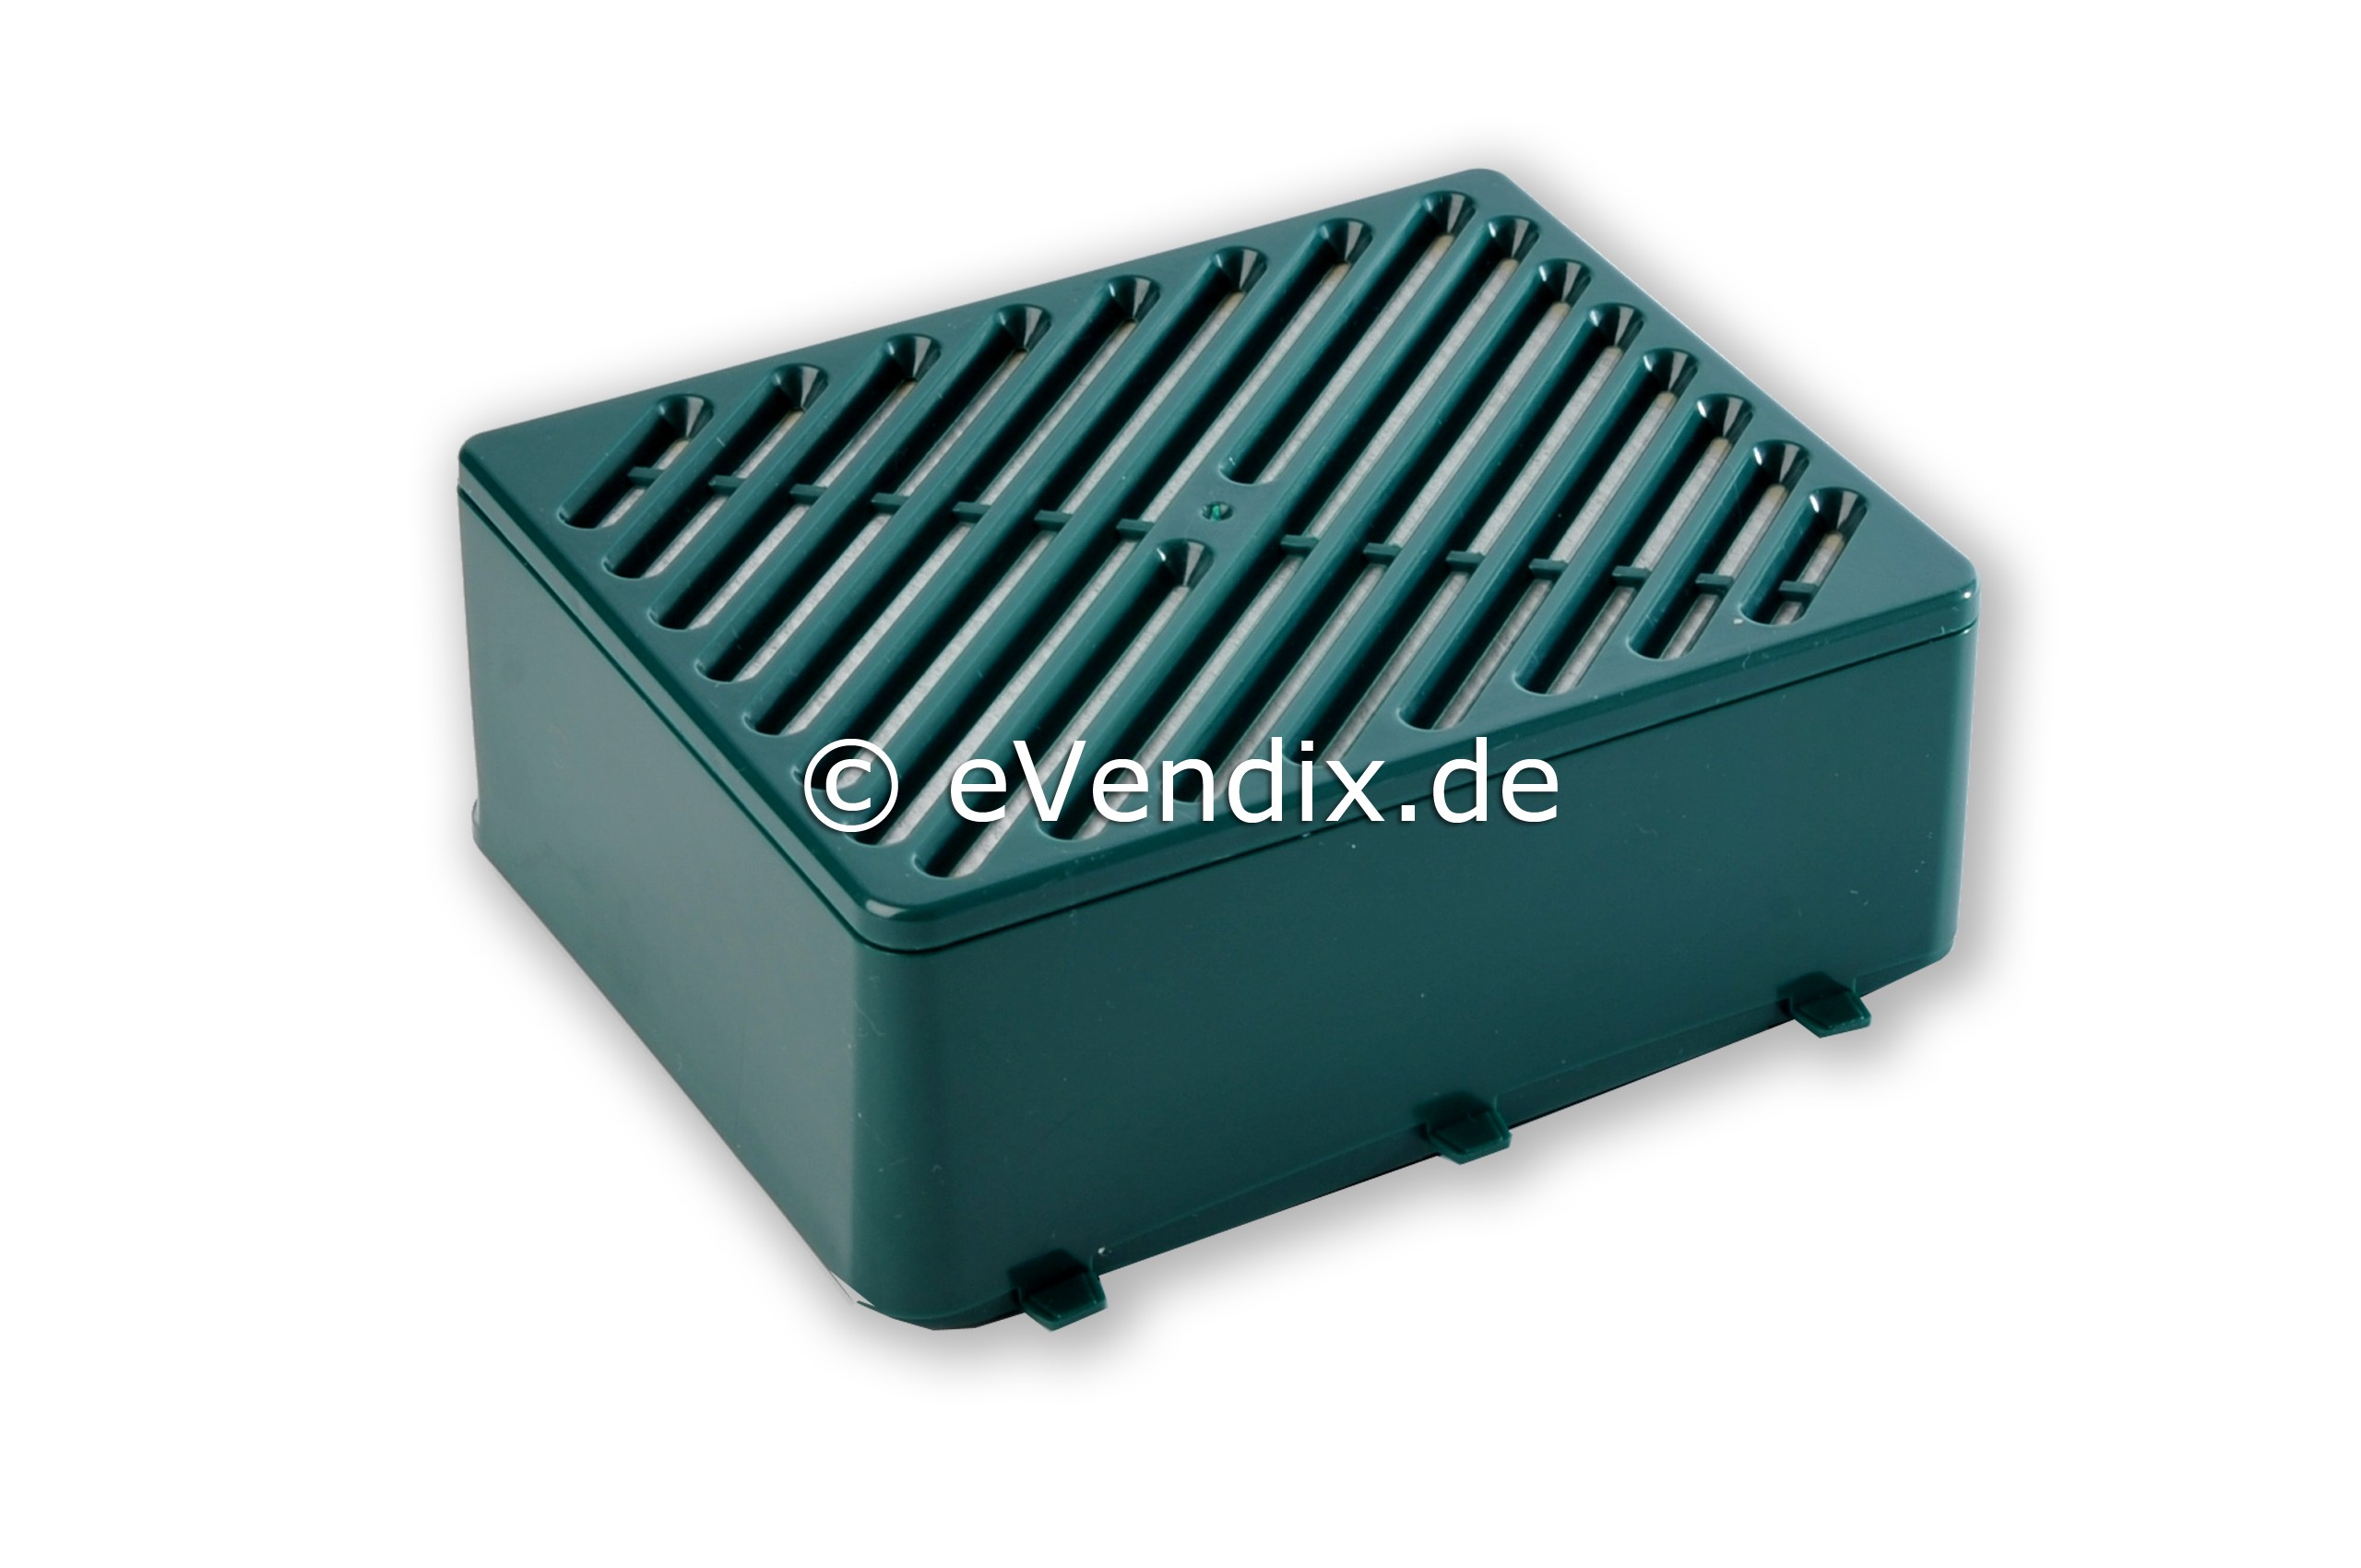 3 x Aktiv-Filtersysteme Hygiene Mikro (Hepa) Kohle Geruch Filter kompatibel mit Vorwerk Tiger 251, 252